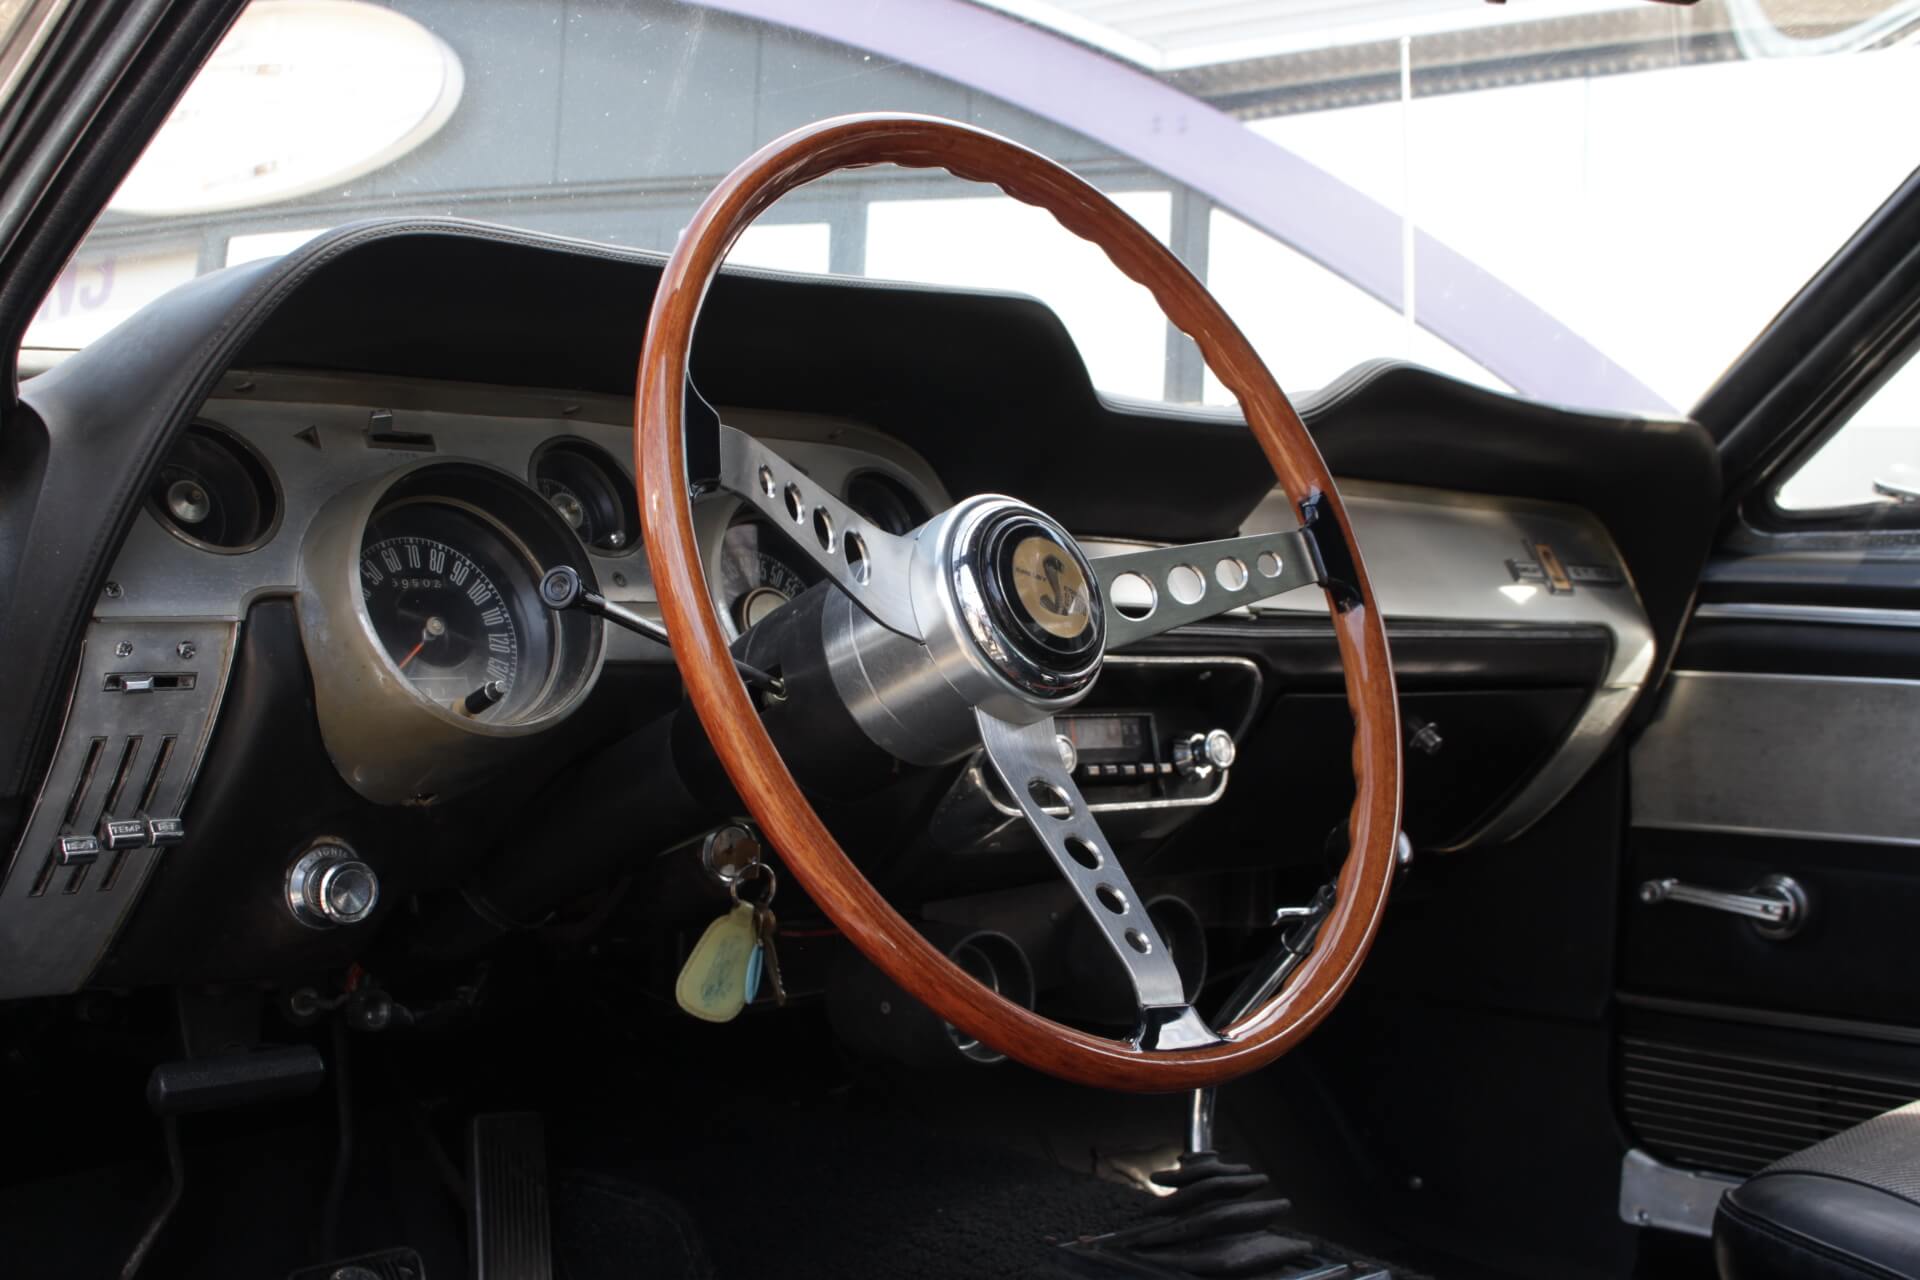 1967 Shelby GT500 4 Speed